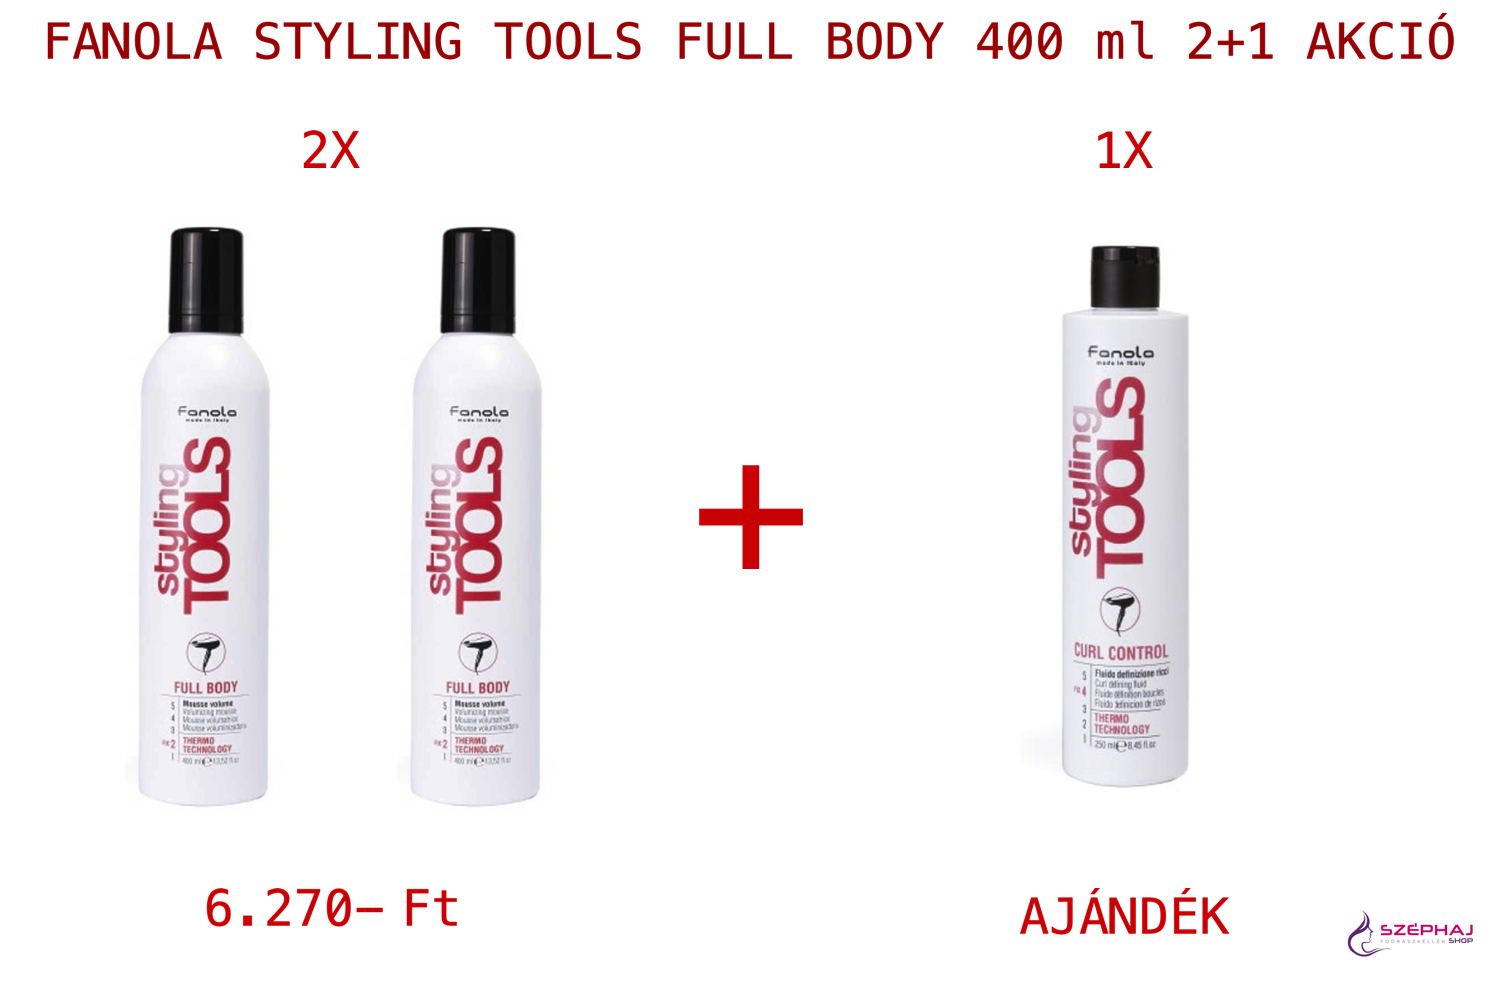 FANOLA Styling Tools Full Body 400 ml 2+1 AKCIÓ